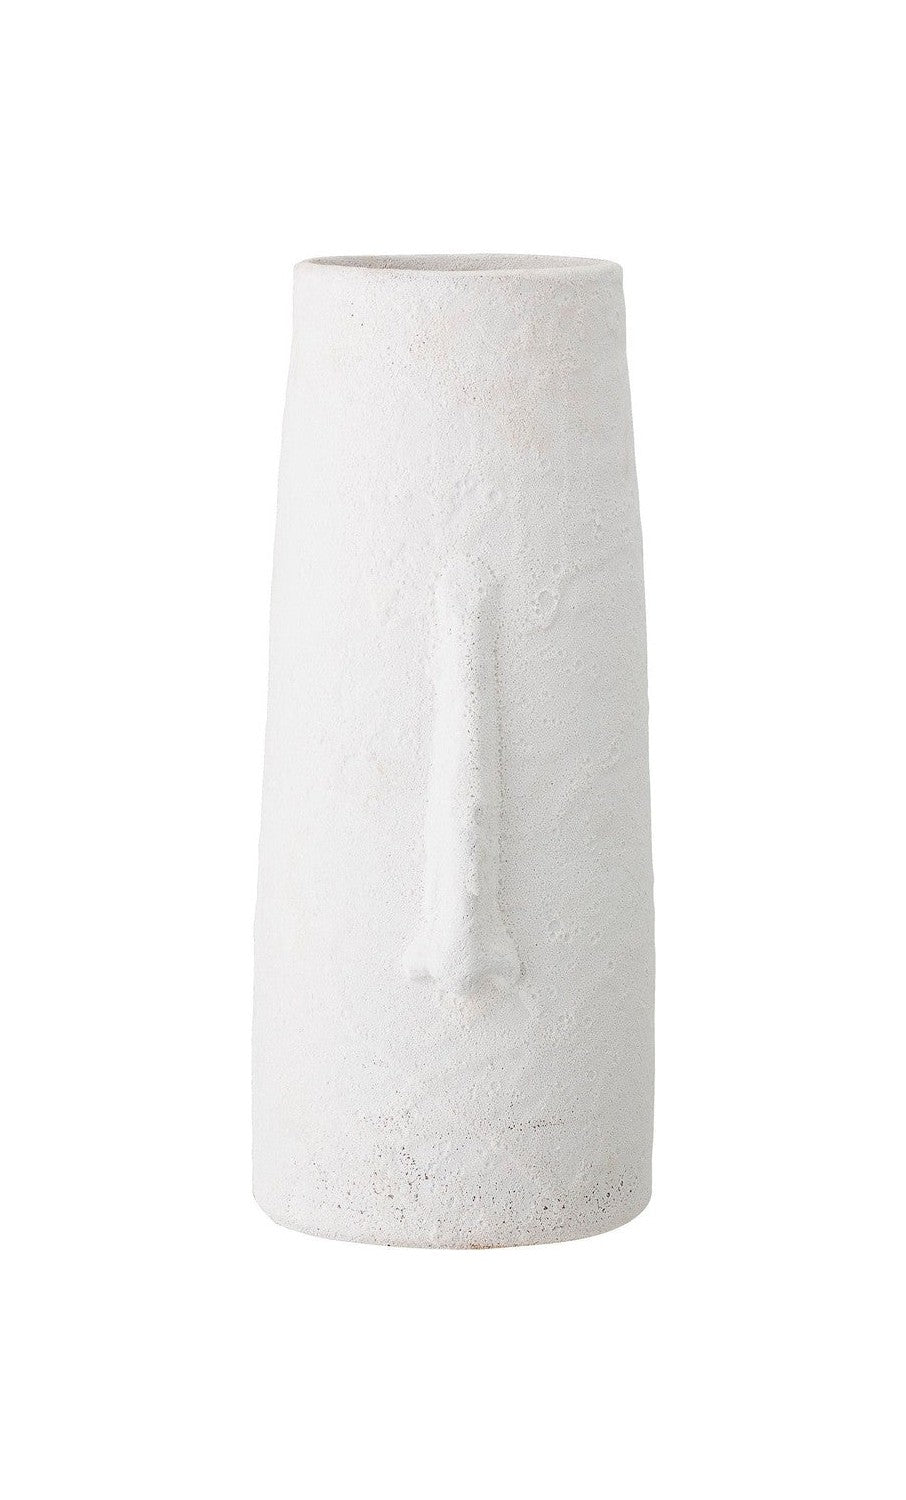 Bloomingville Berican Deco wazon, biały, terakota